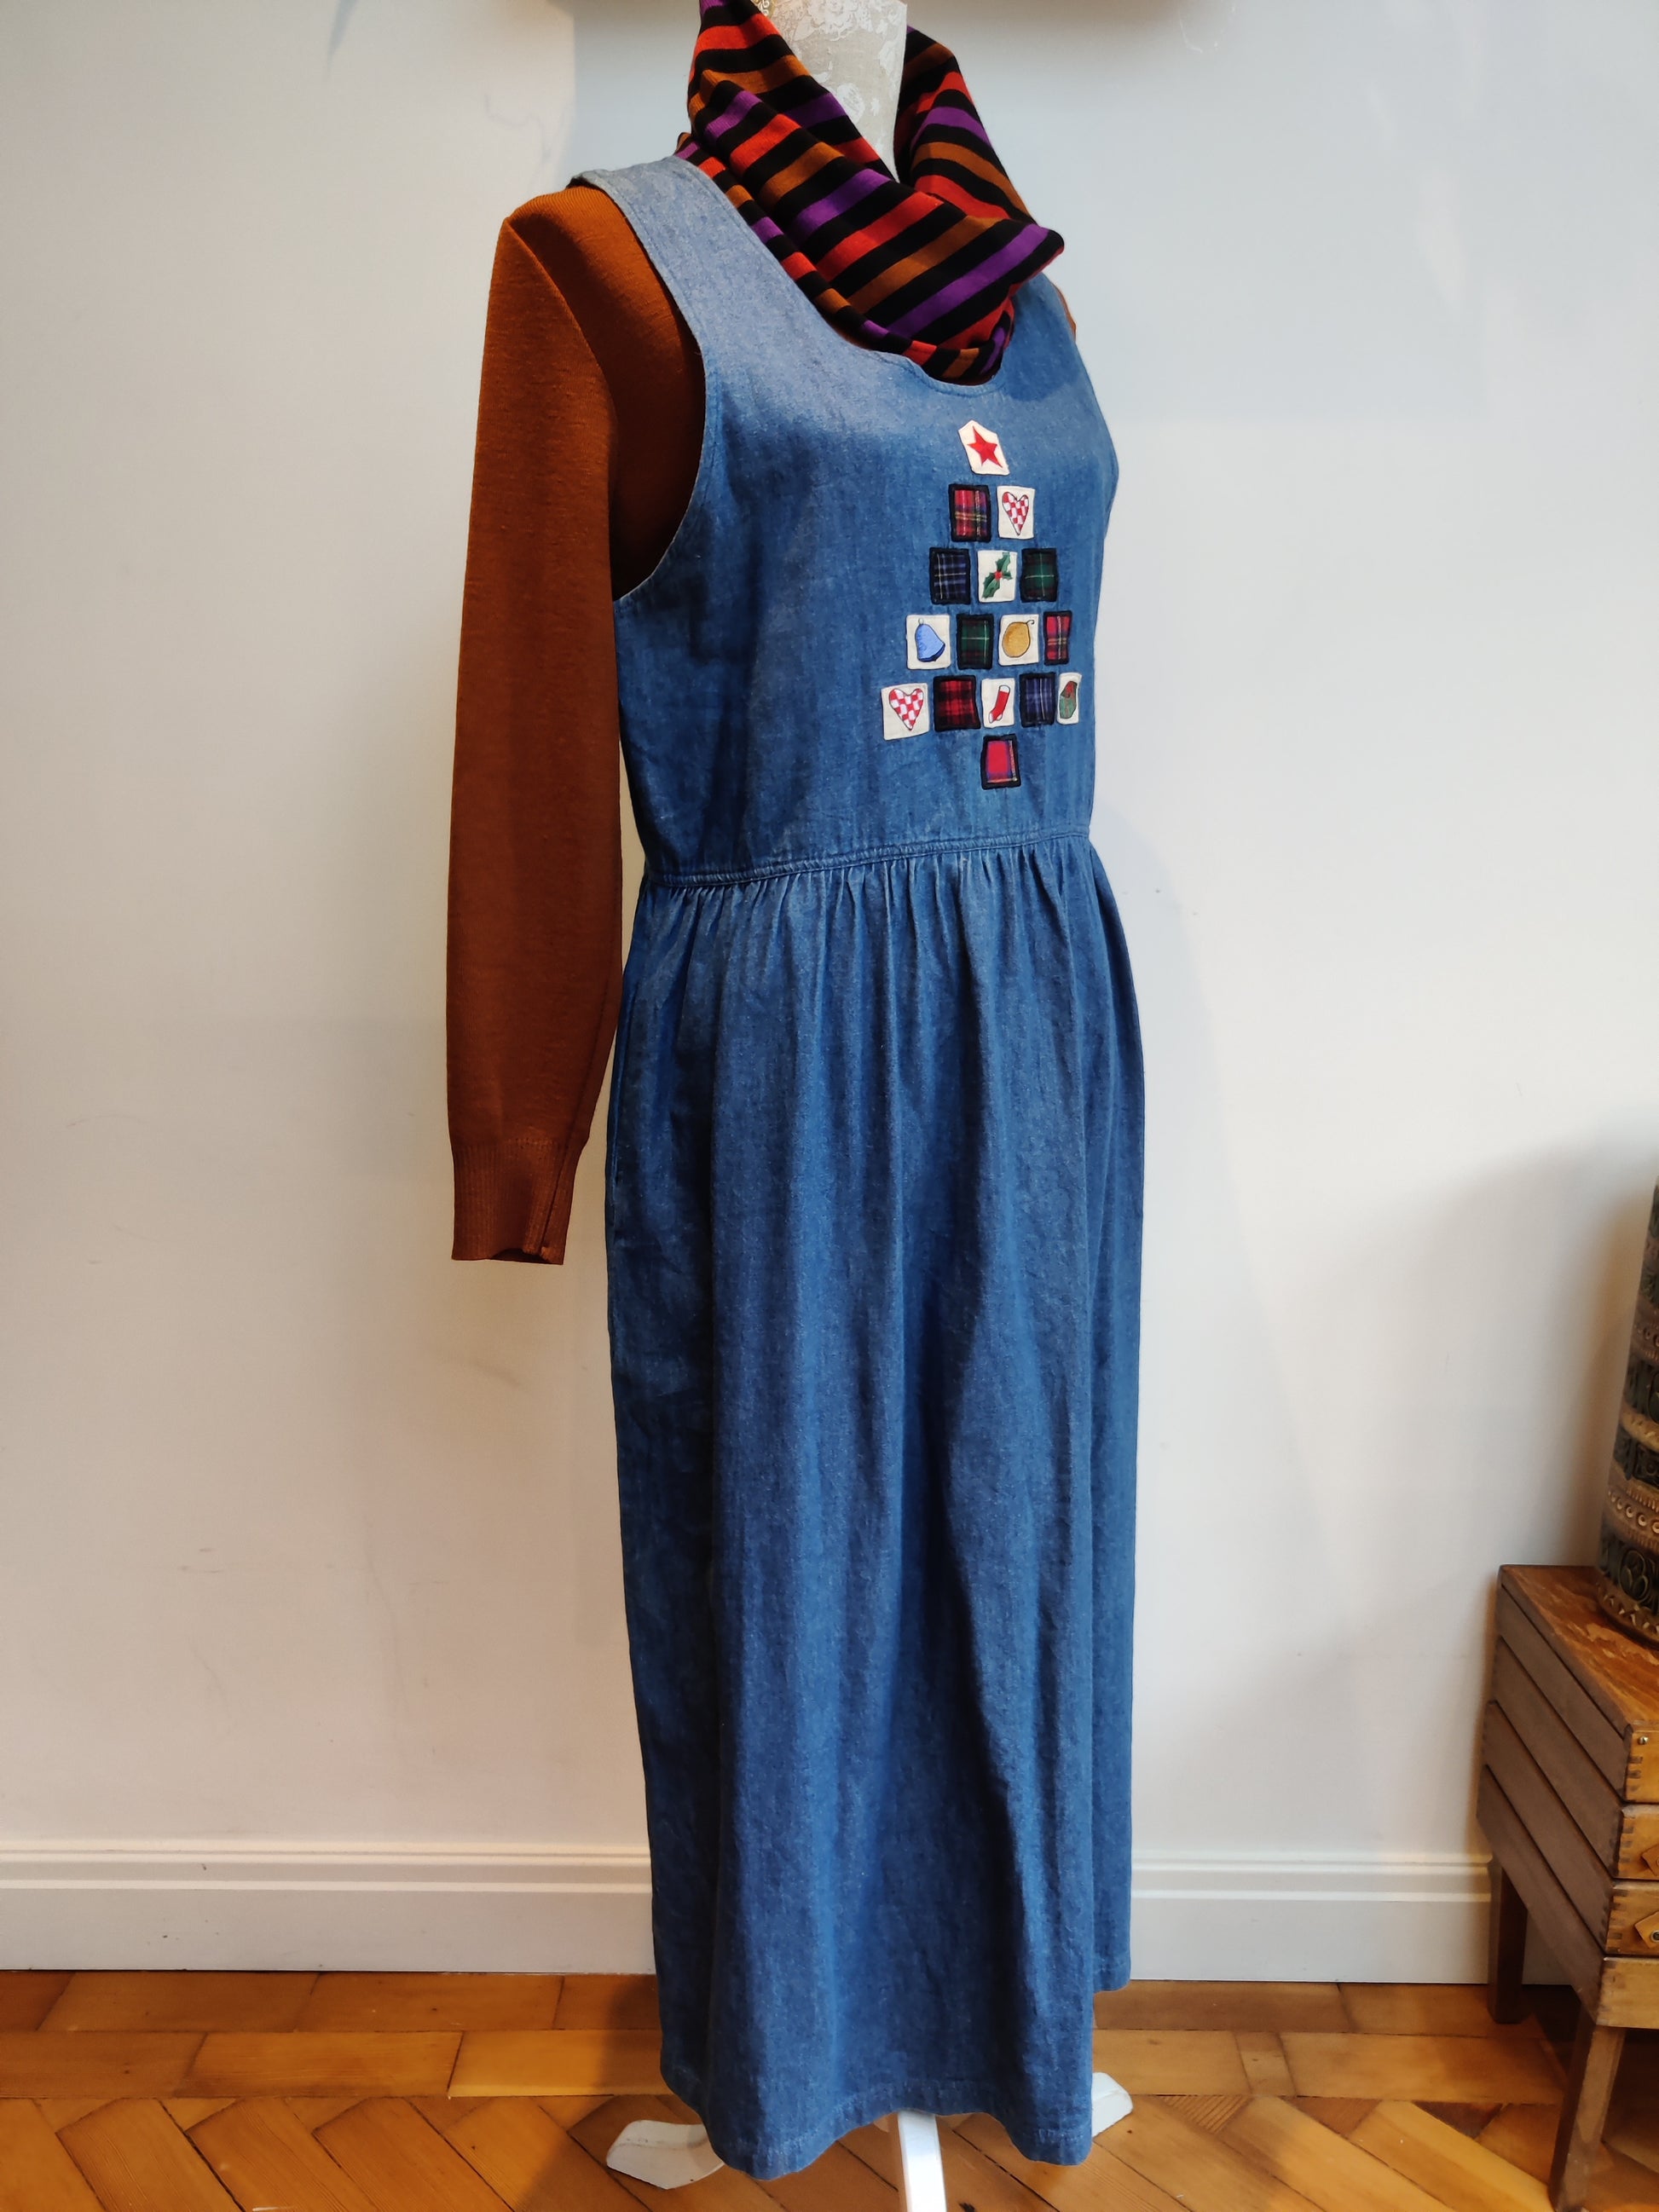 Amazing blue vintage denim pinafore dress